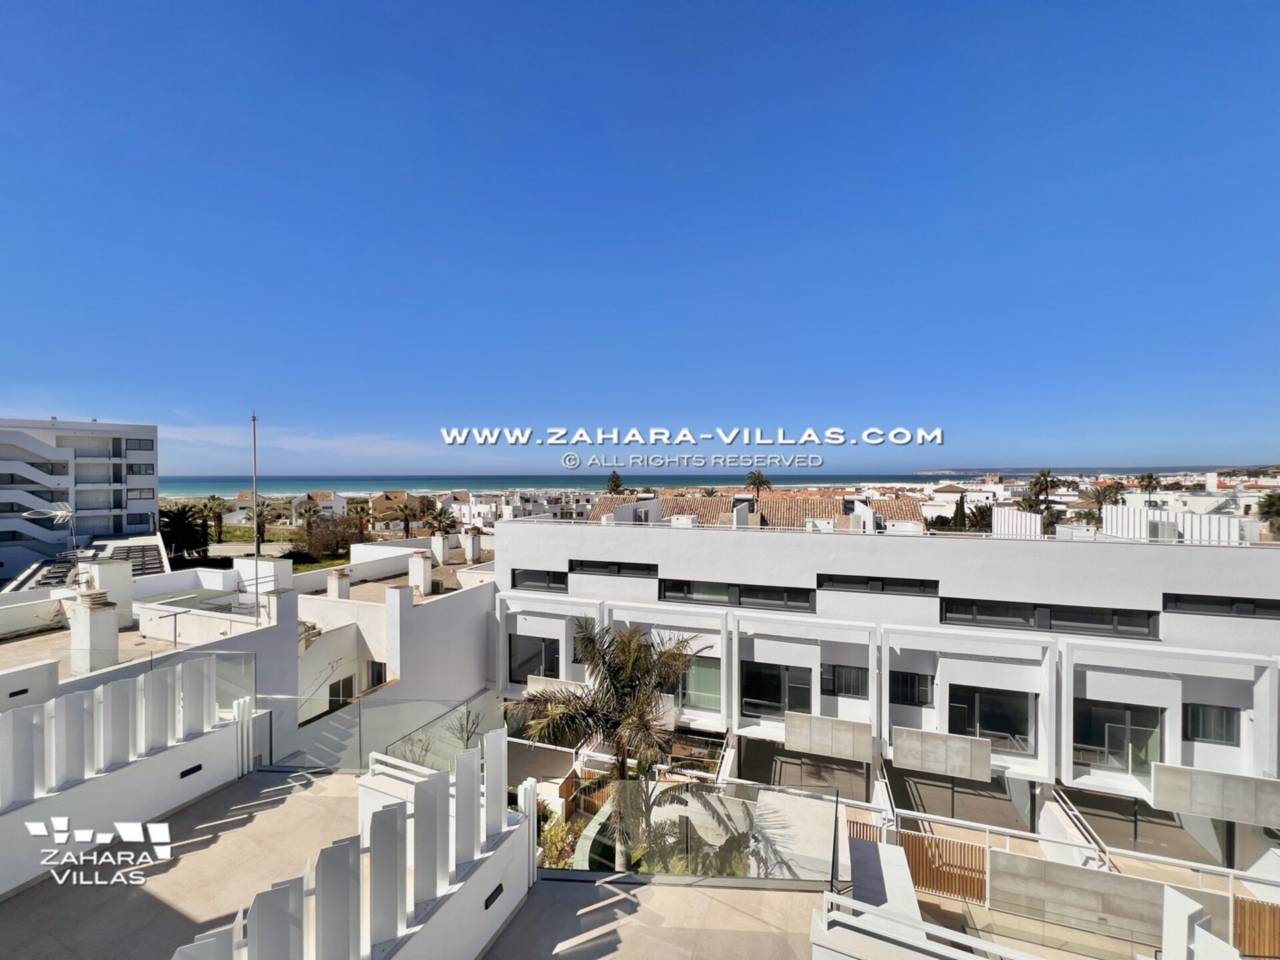 Imagen 1 de  New development completed "EL OASIS DE ZAHARA" semi-detached houses by the sea